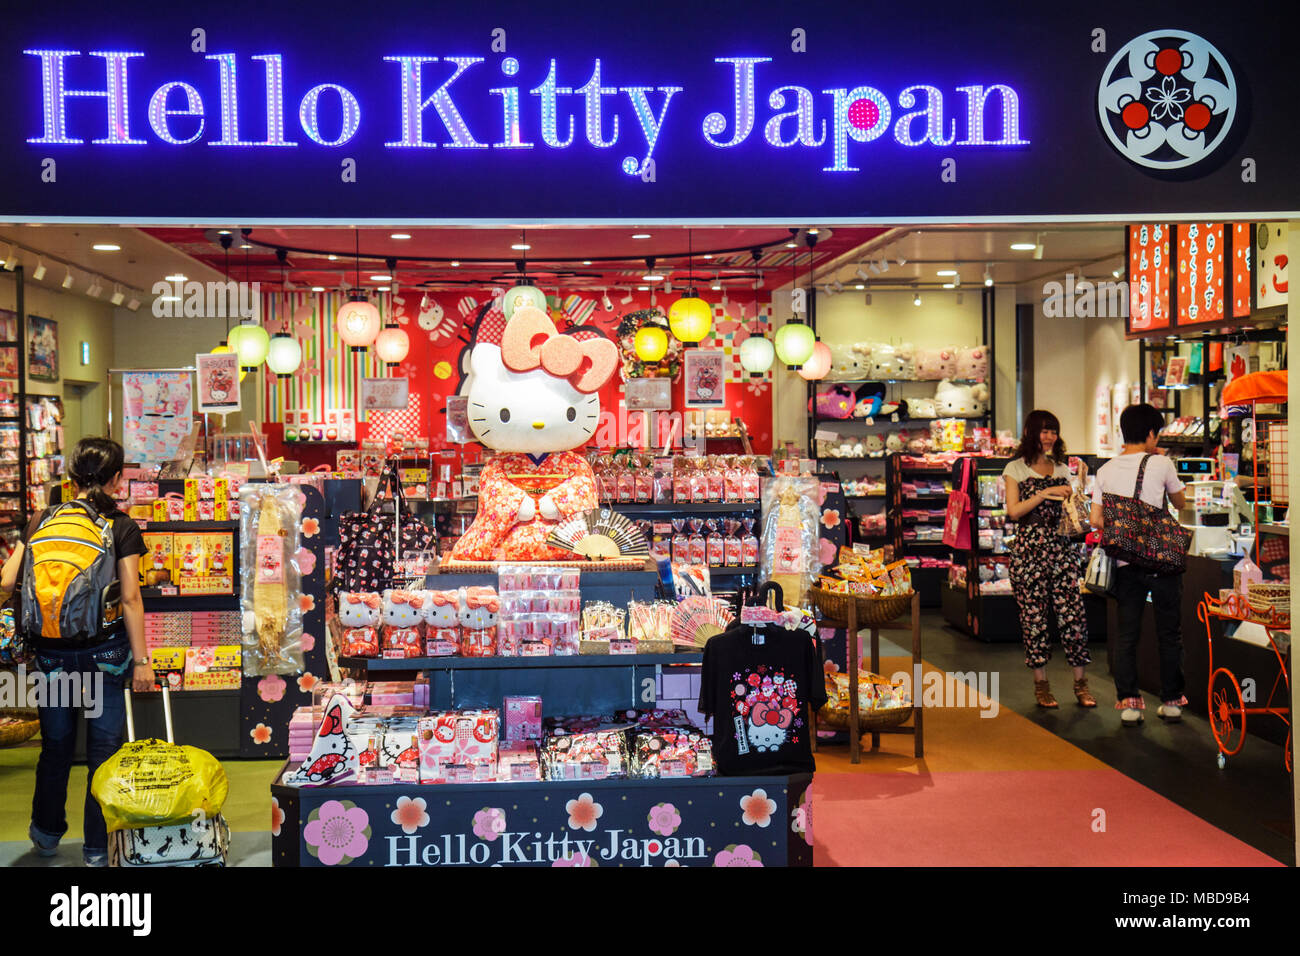 Tokyo Japan,Haneda Airport,kanji,characters,symbols,Japanese English,shopping shopper shoppers shop shops market markets marketplace buying selling,re Stock Photo